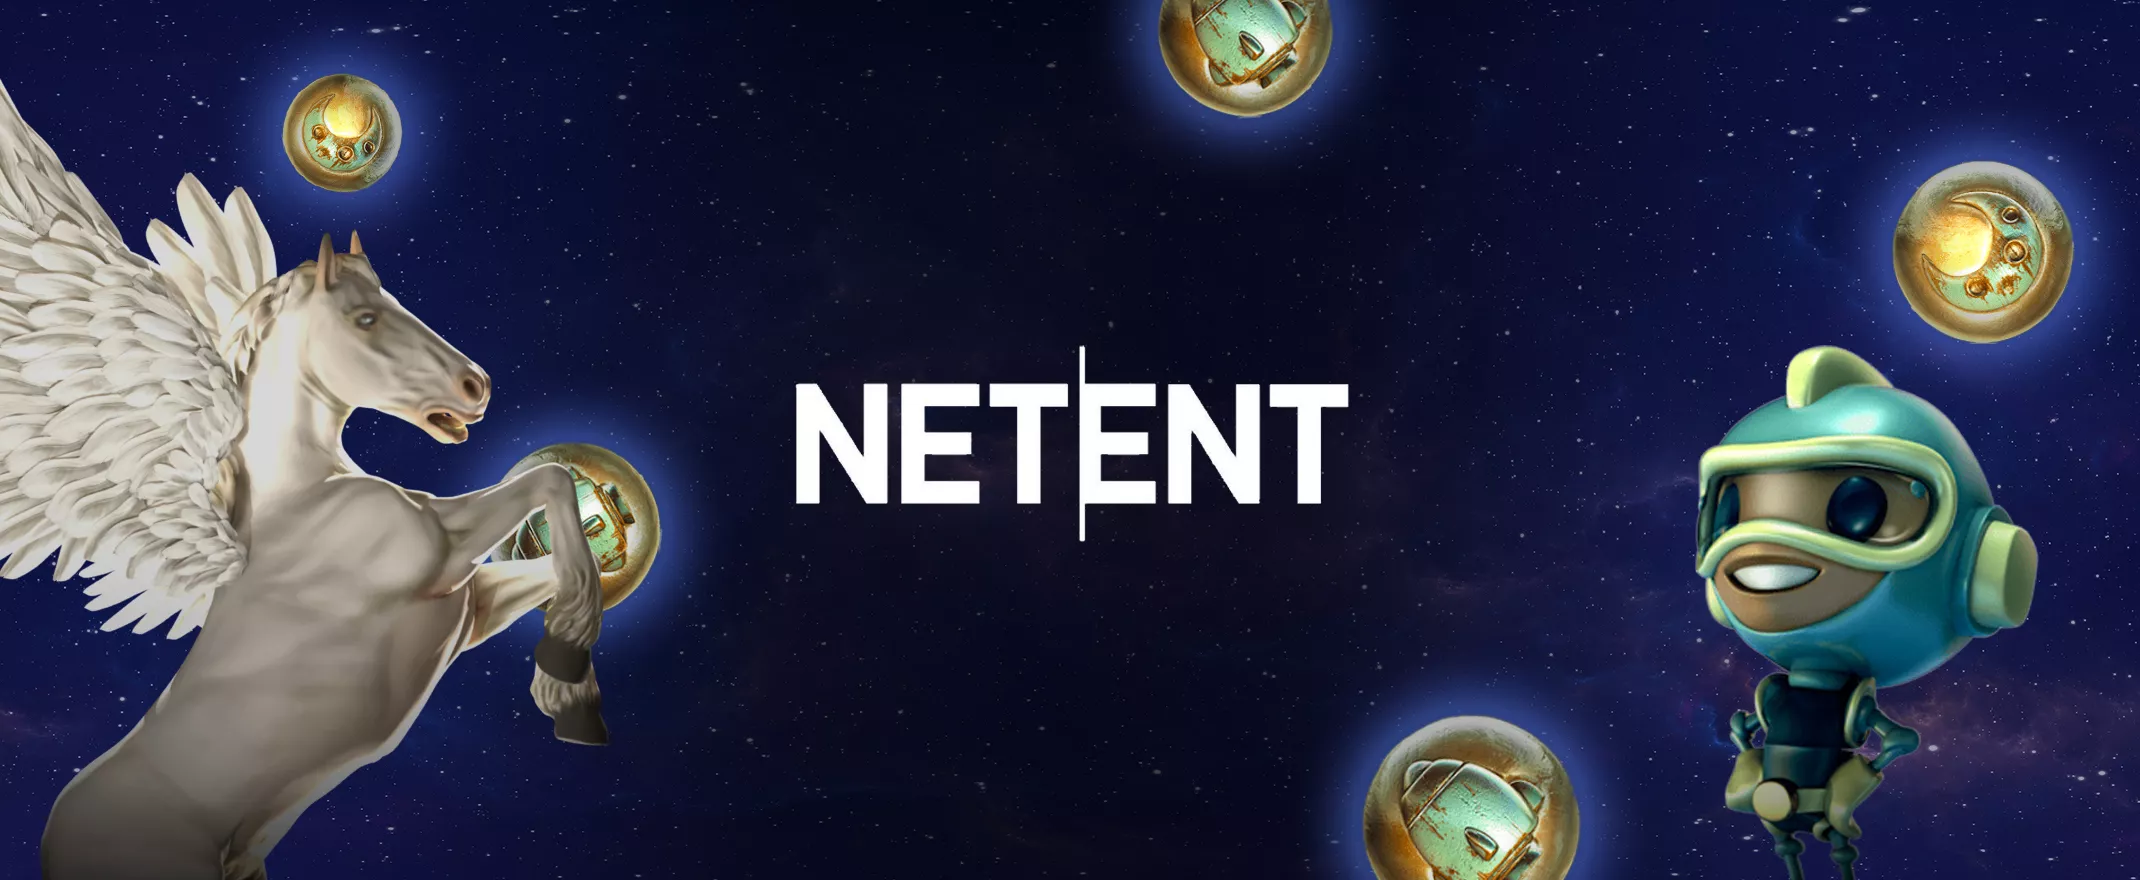 Banner de jackpots de NetEnt